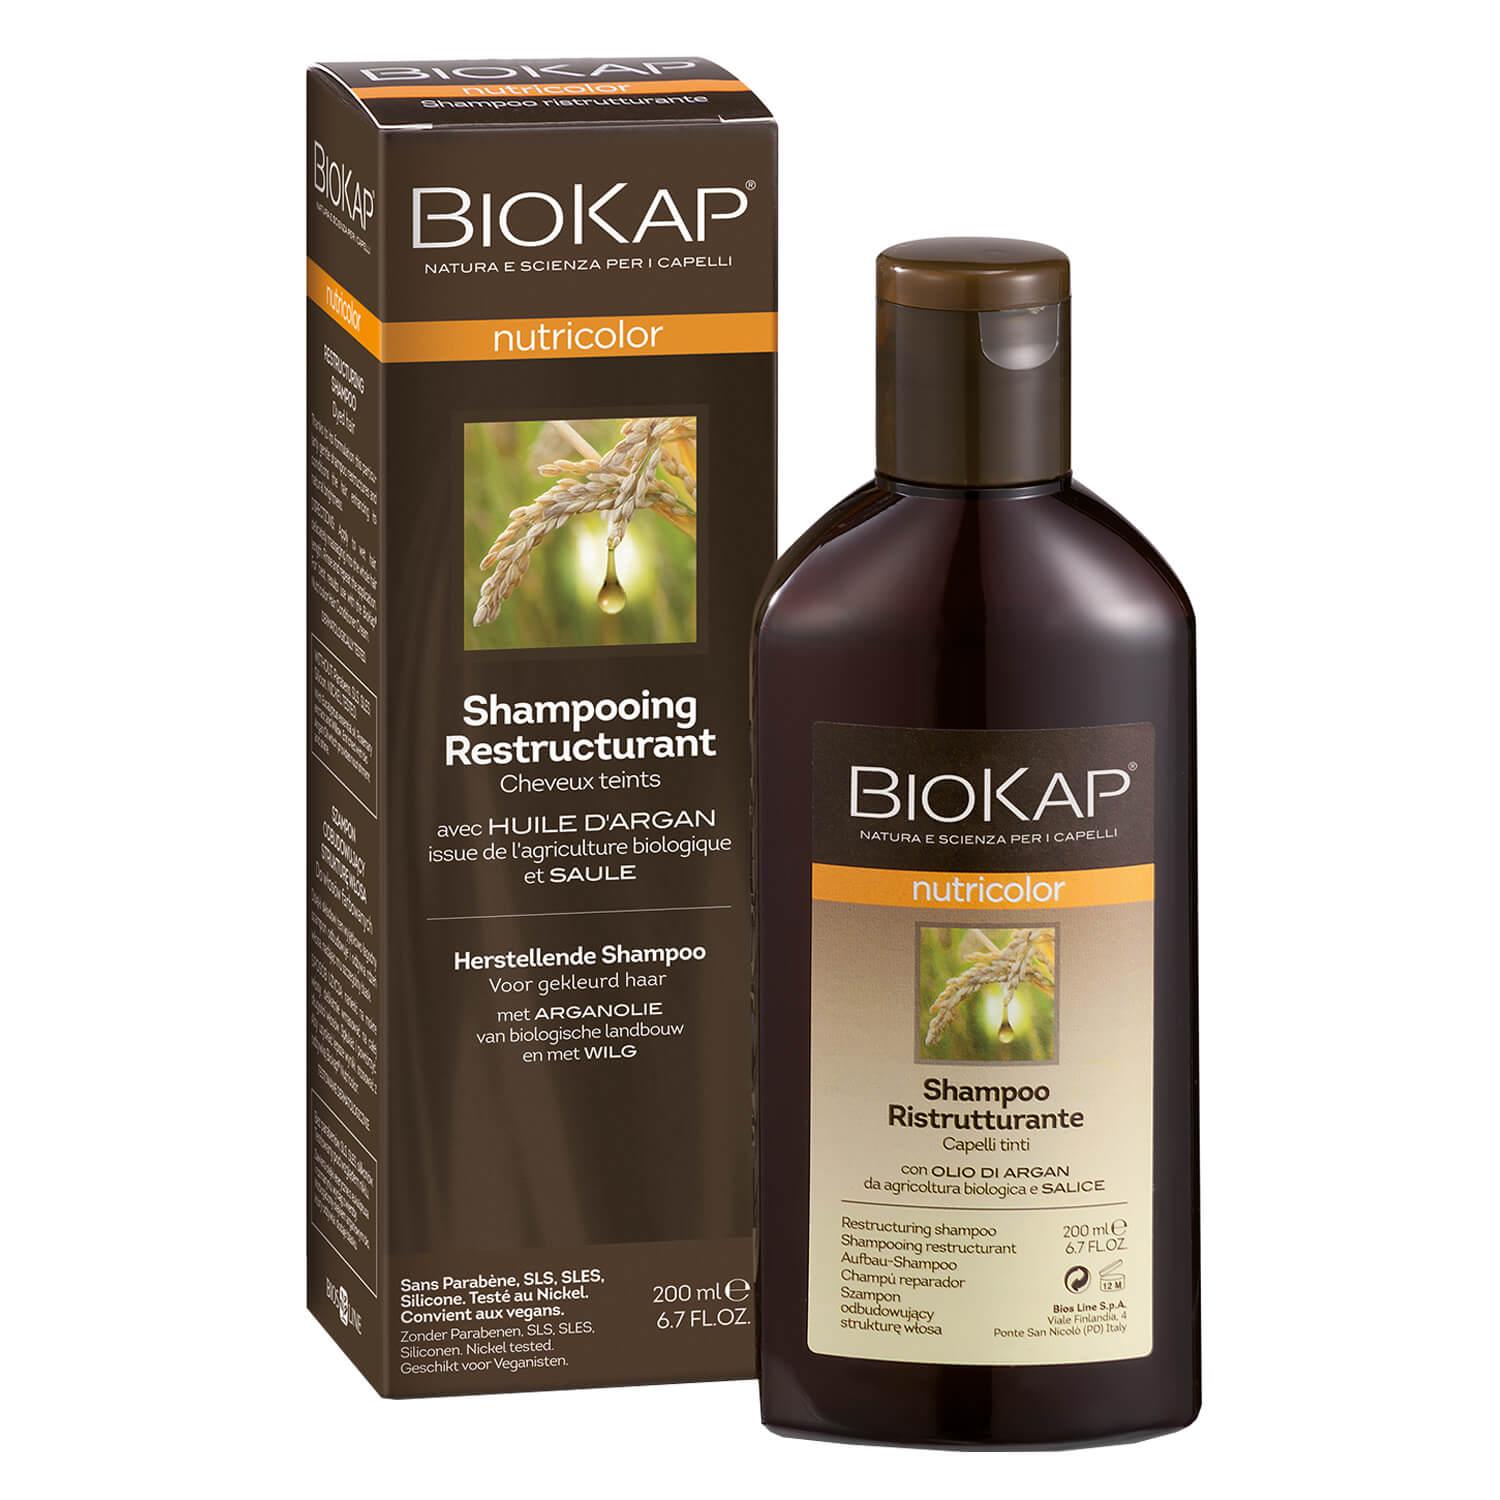 BIOKAP Nutricolor - Restructuring Shampoo